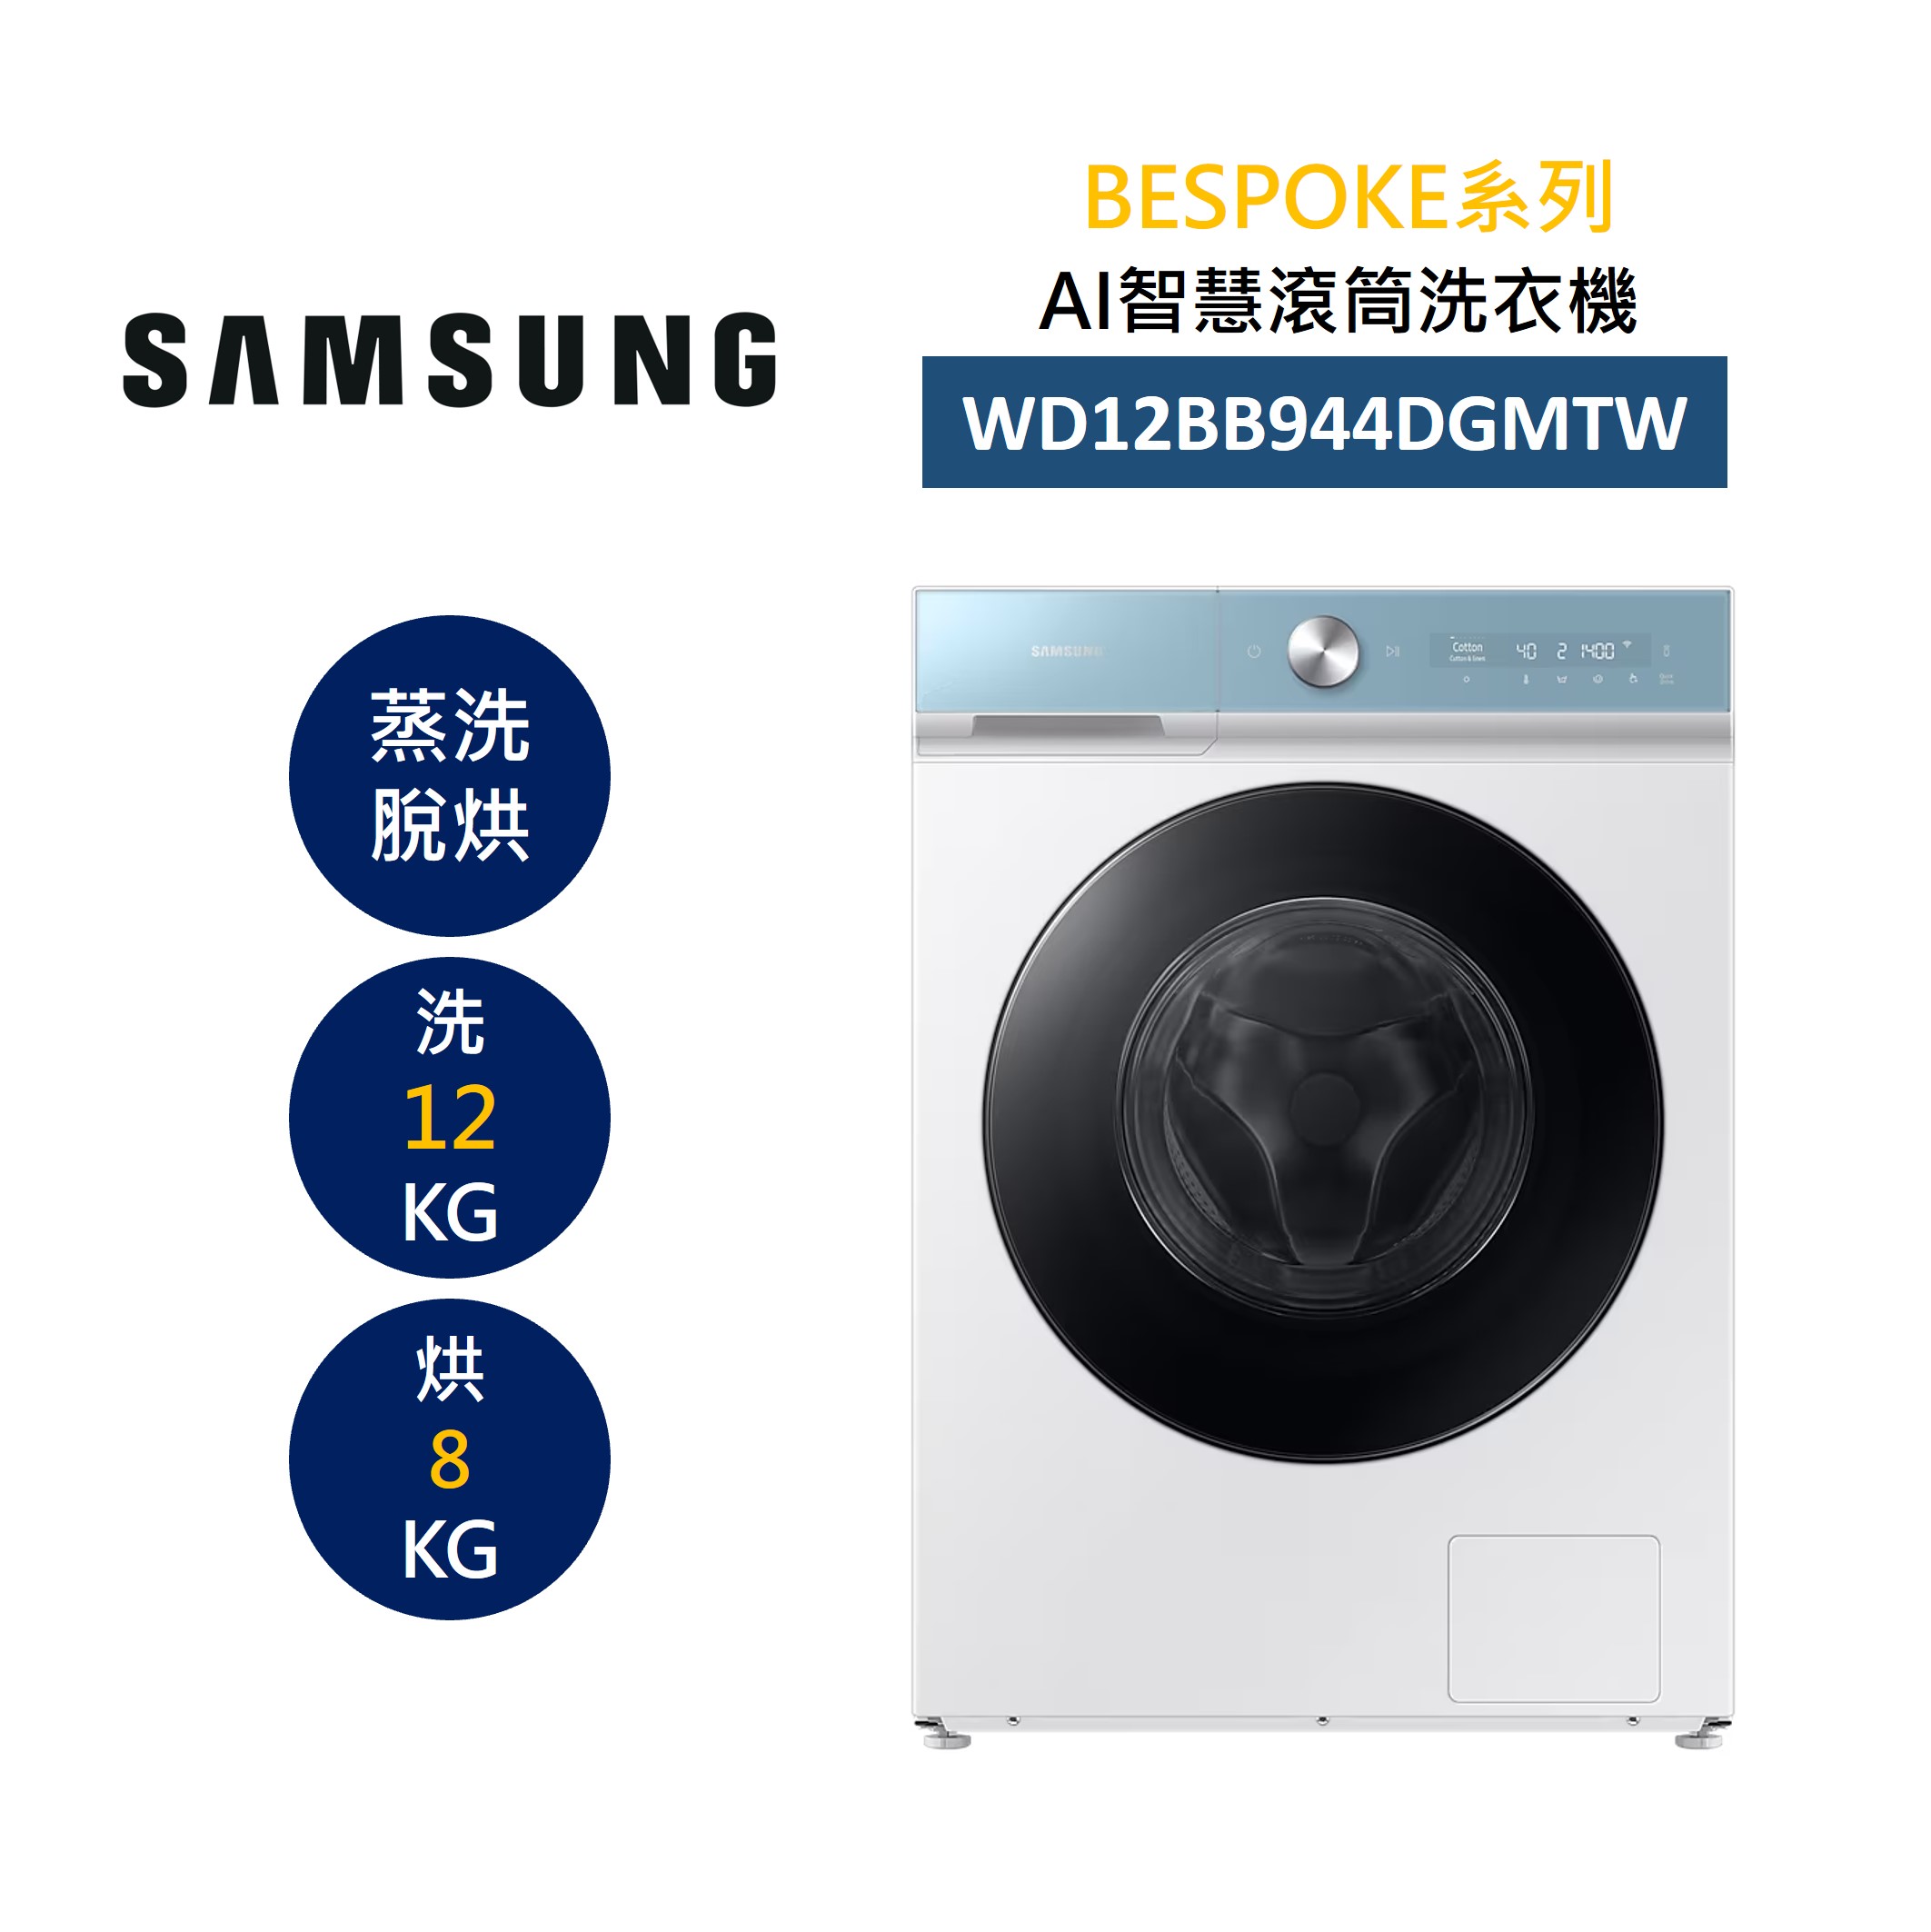 SAMSUNG 三星 WD12BB944DGMTW 12+8KG 蒸洗脫烘 AI智慧滾筒洗衣機 BESPOKE系列